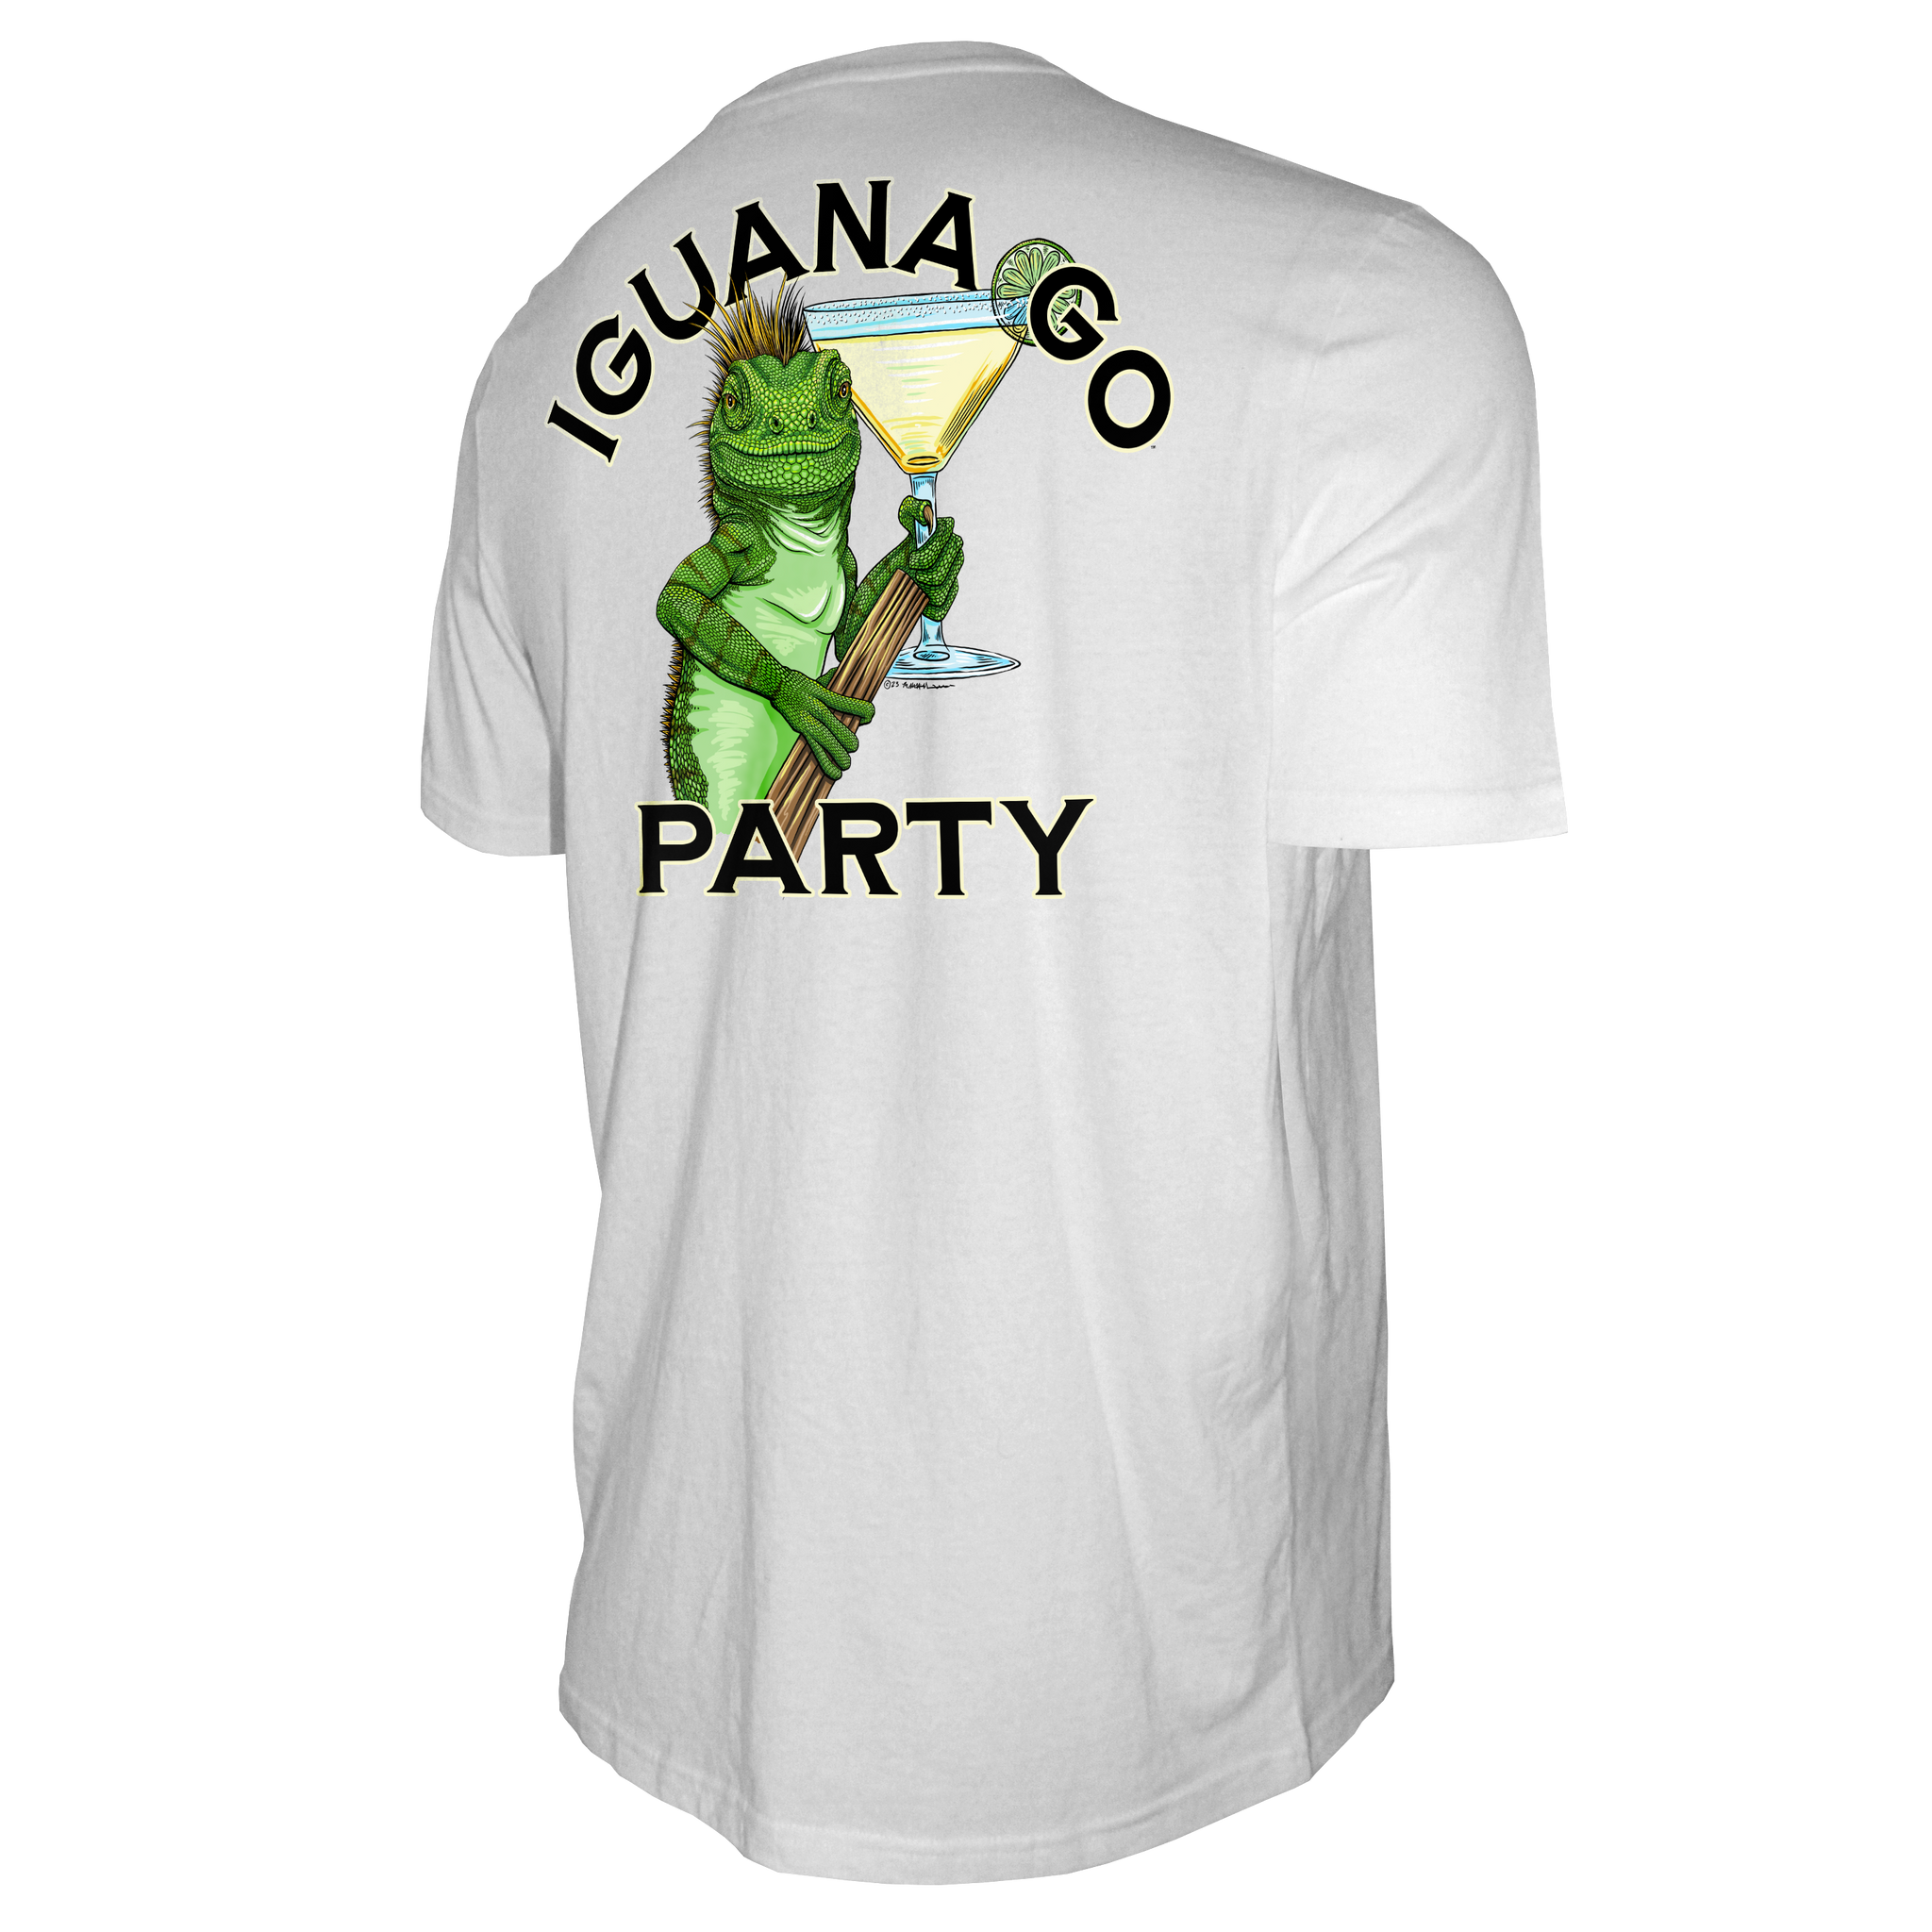 IGUANA GO - Short Sleeve Tee - Iguana Go PARTY